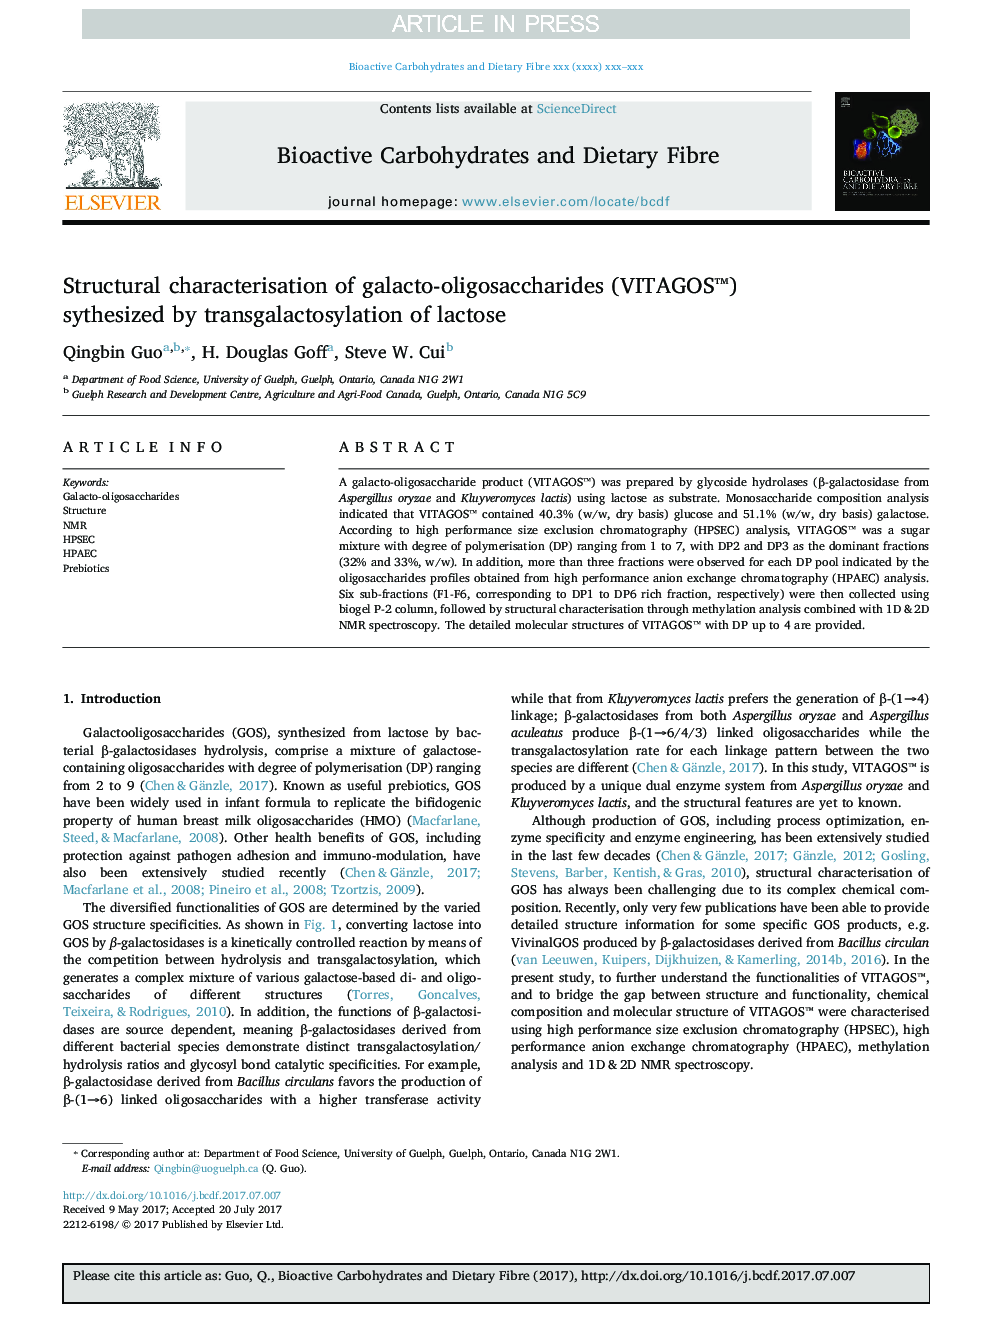 Structural characterisation of galacto-oligosaccharides (VITAGOSâ¢) sythesized by transgalactosylation of lactose